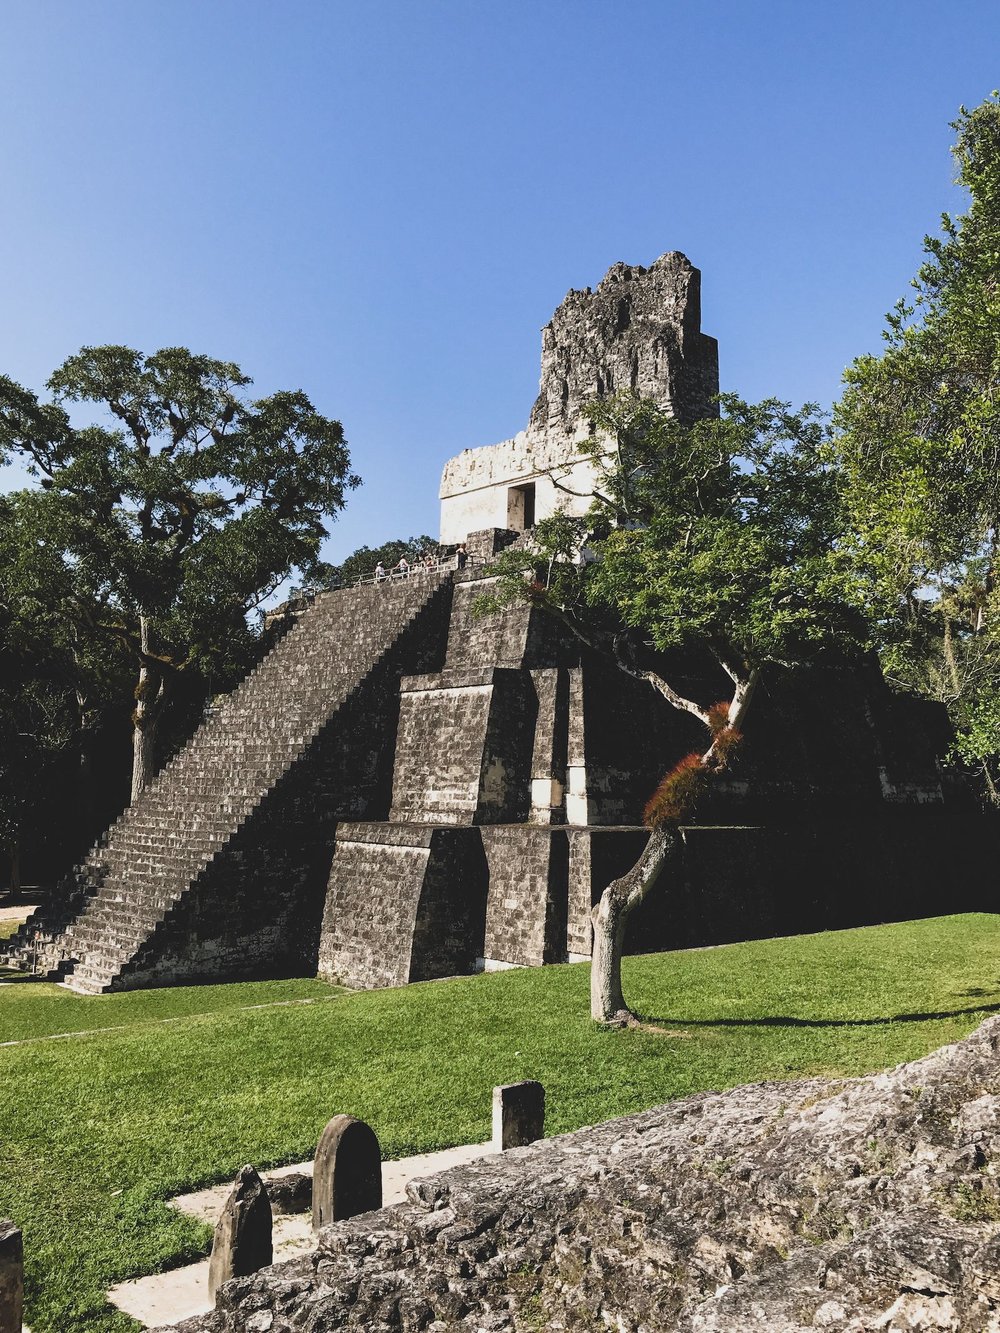 Temple II in Tikal National Park, Guatemala